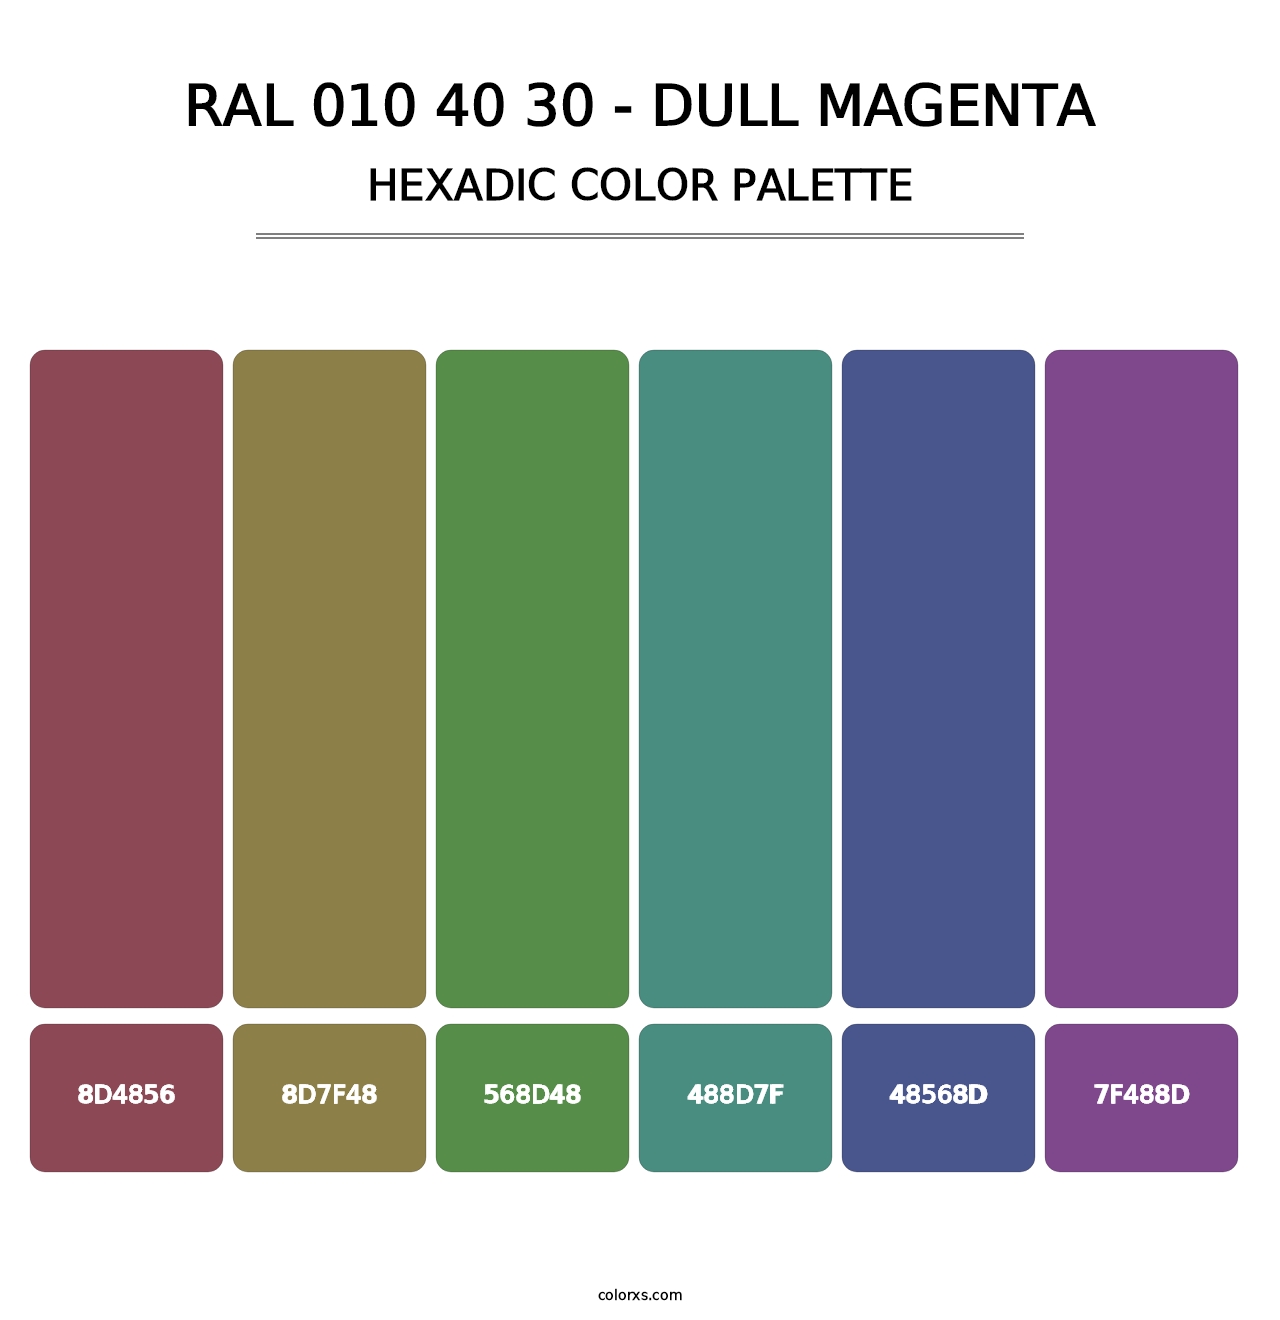 RAL 010 40 30 - Dull Magenta - Hexadic Color Palette